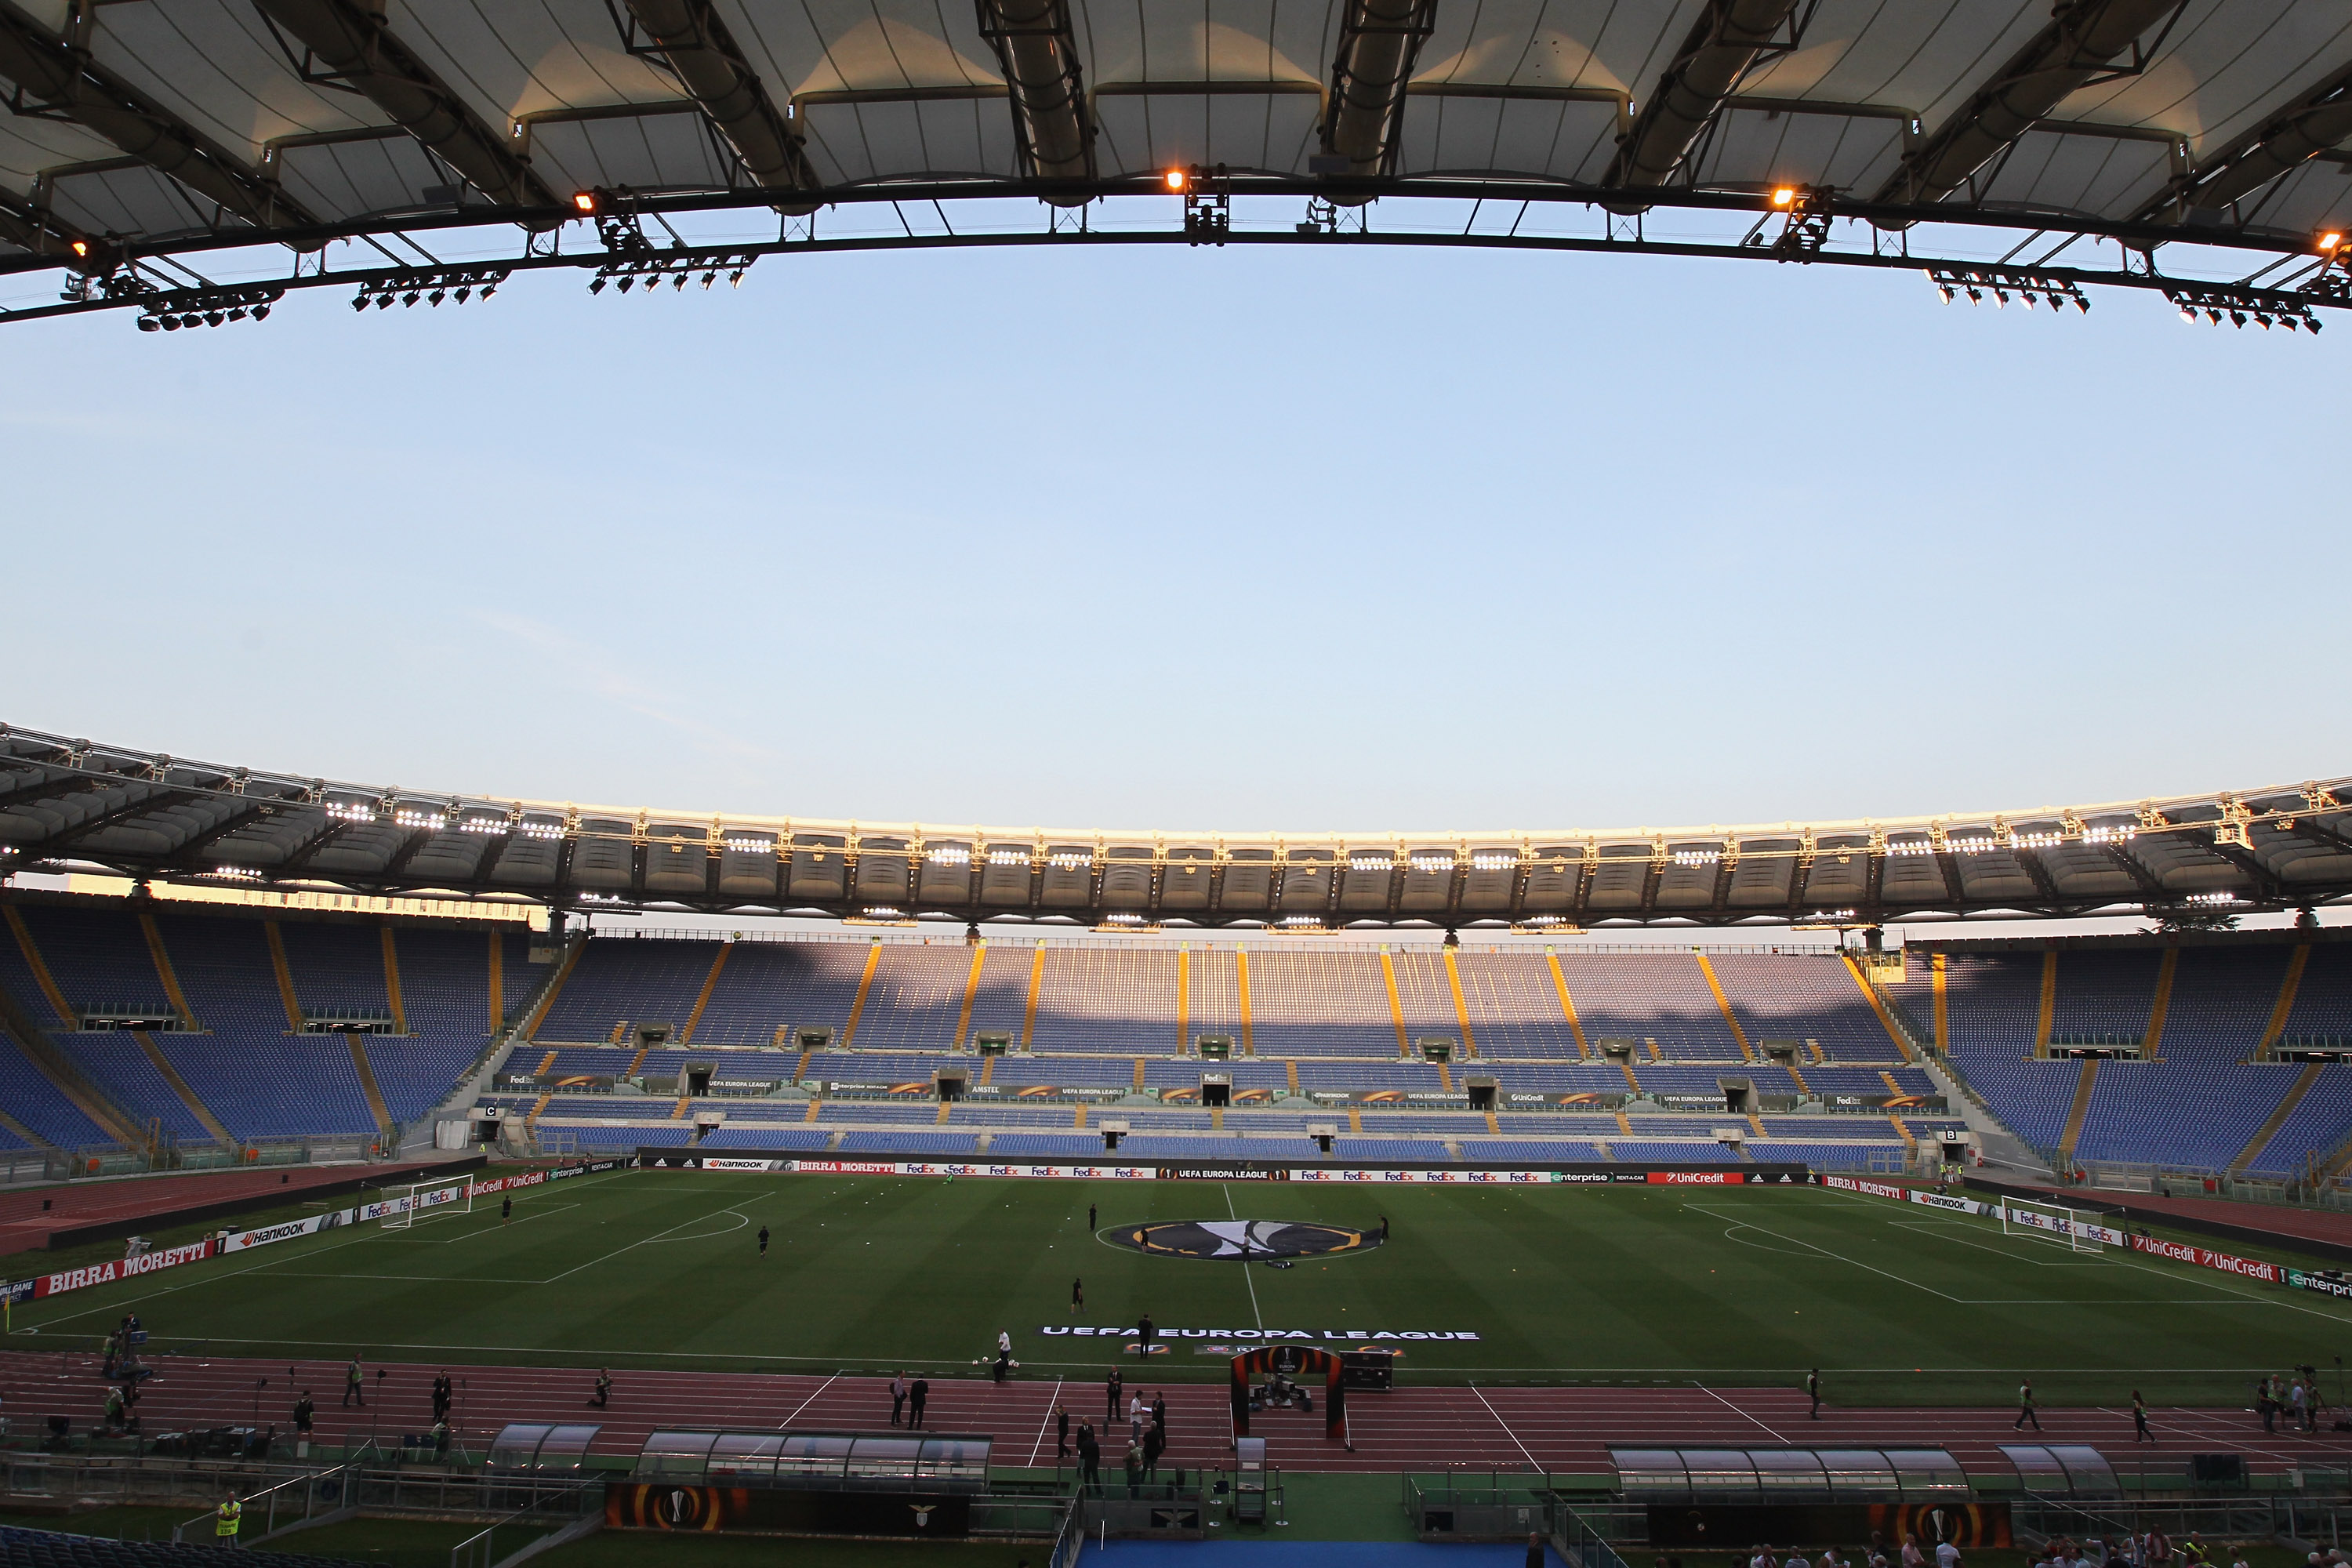 Roma vs Ternana prediction, preview, team news and more